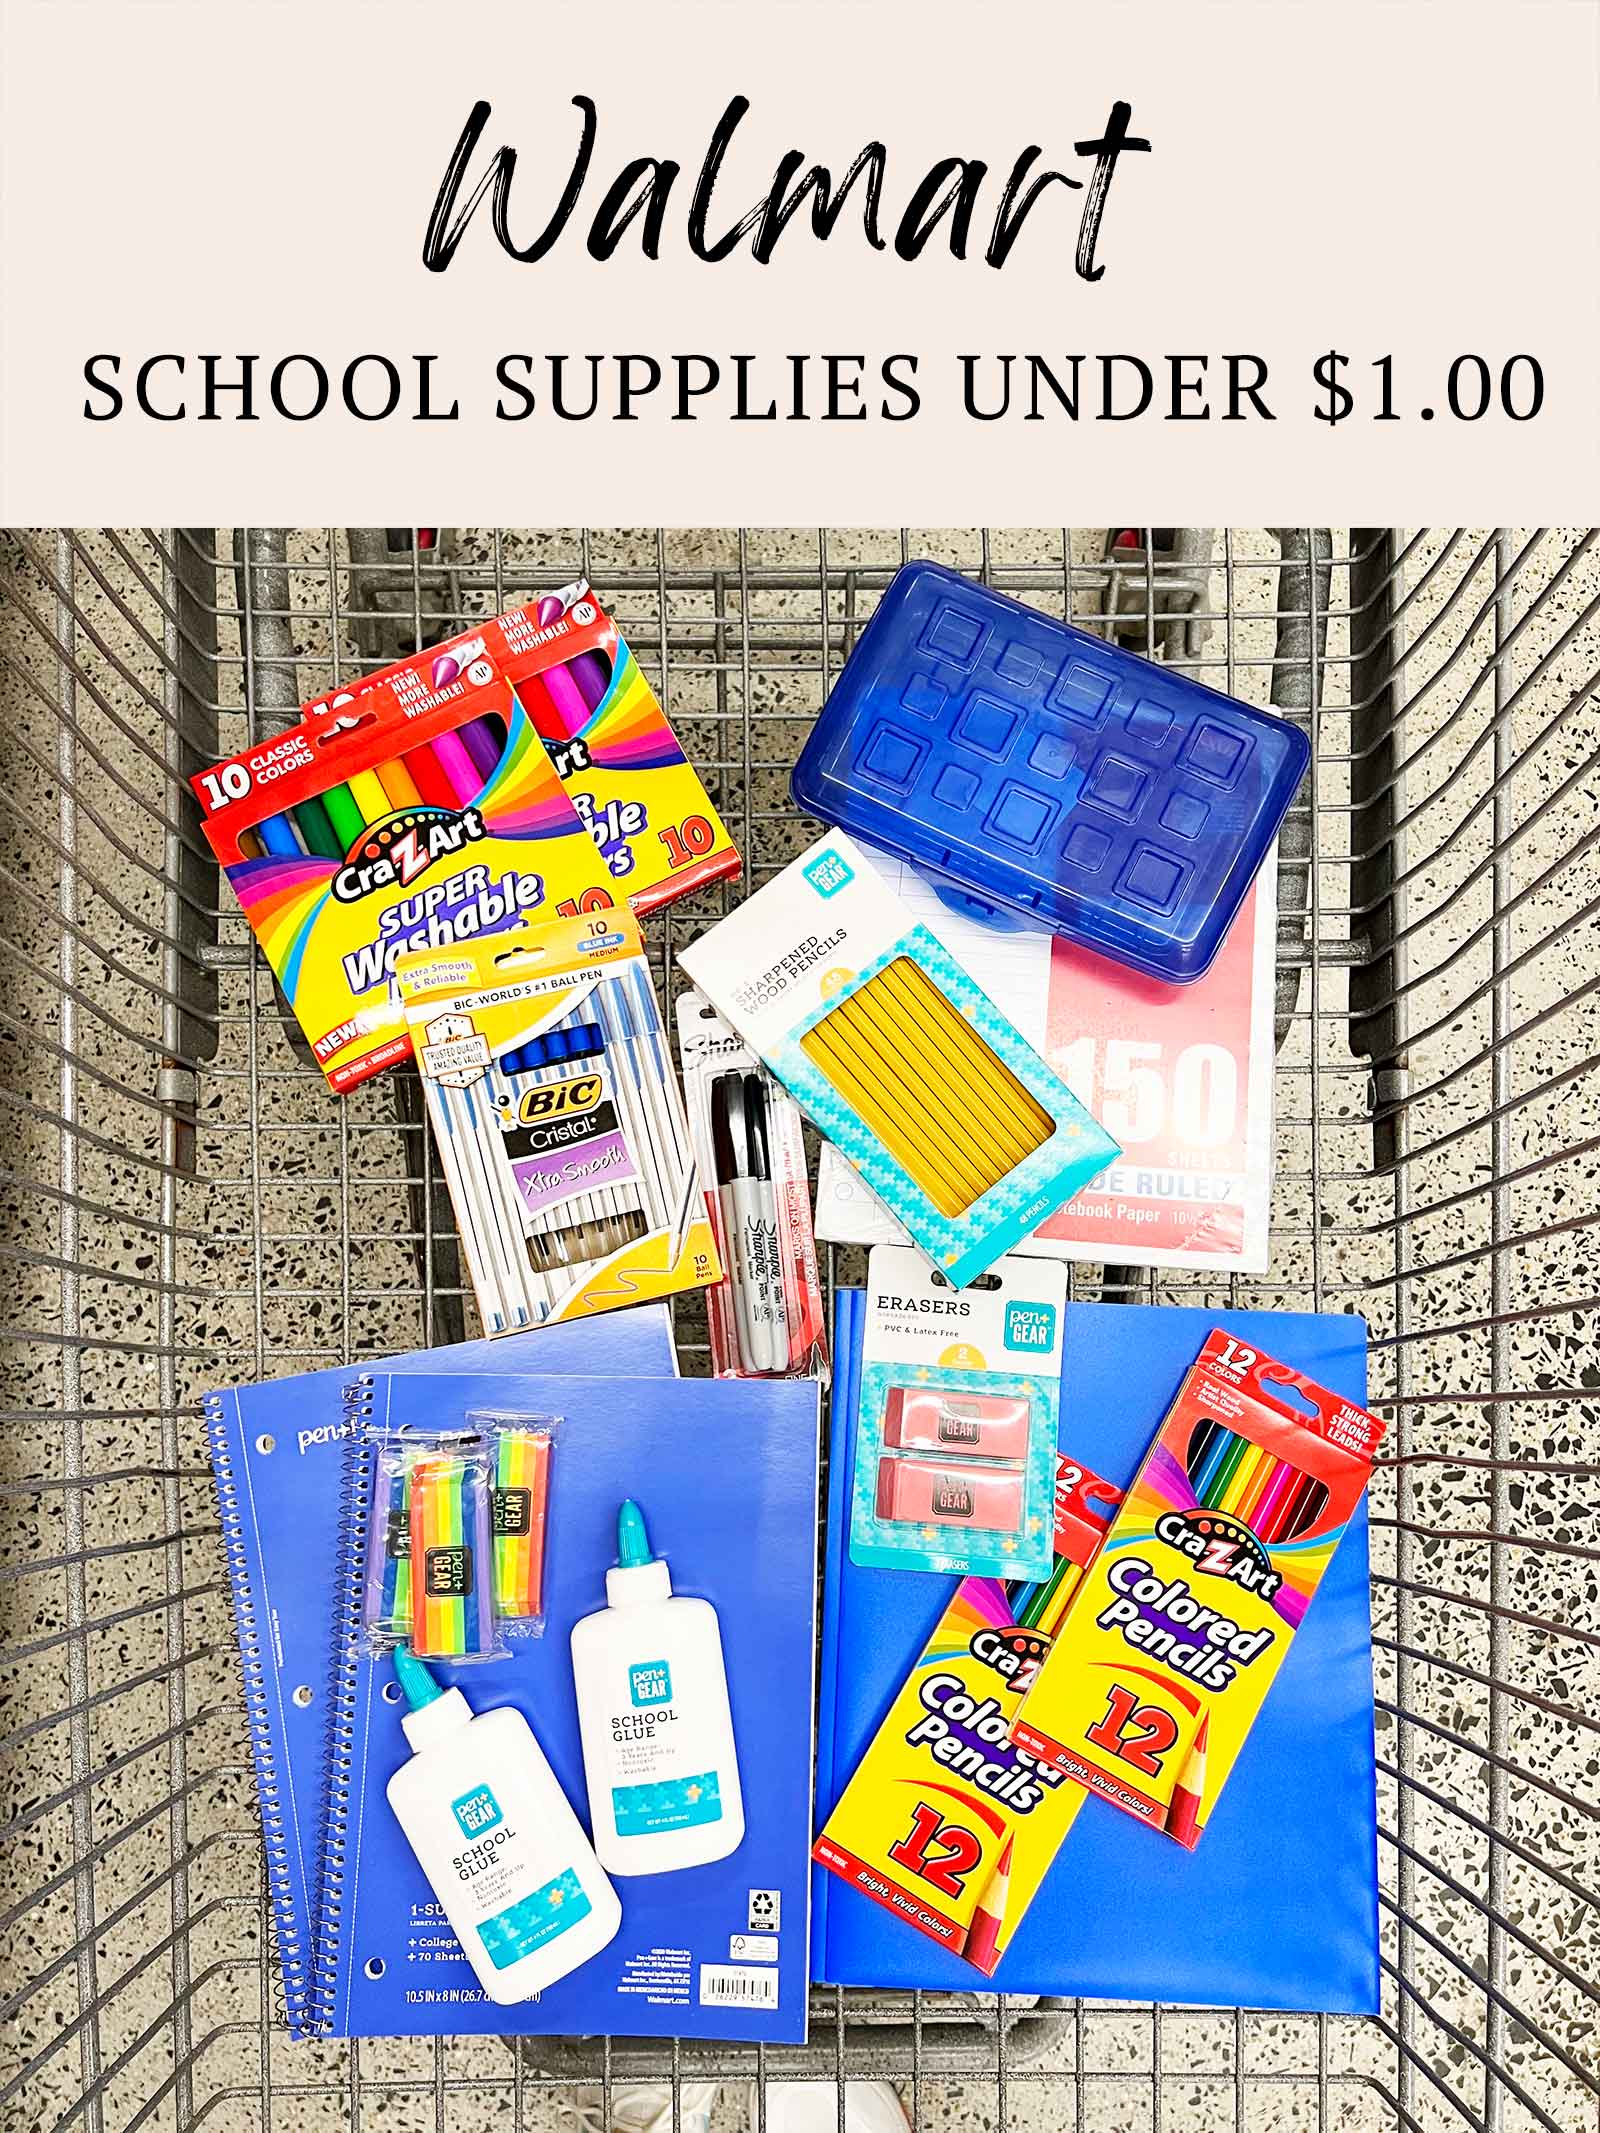 Walmart has school supplies under $1.00!